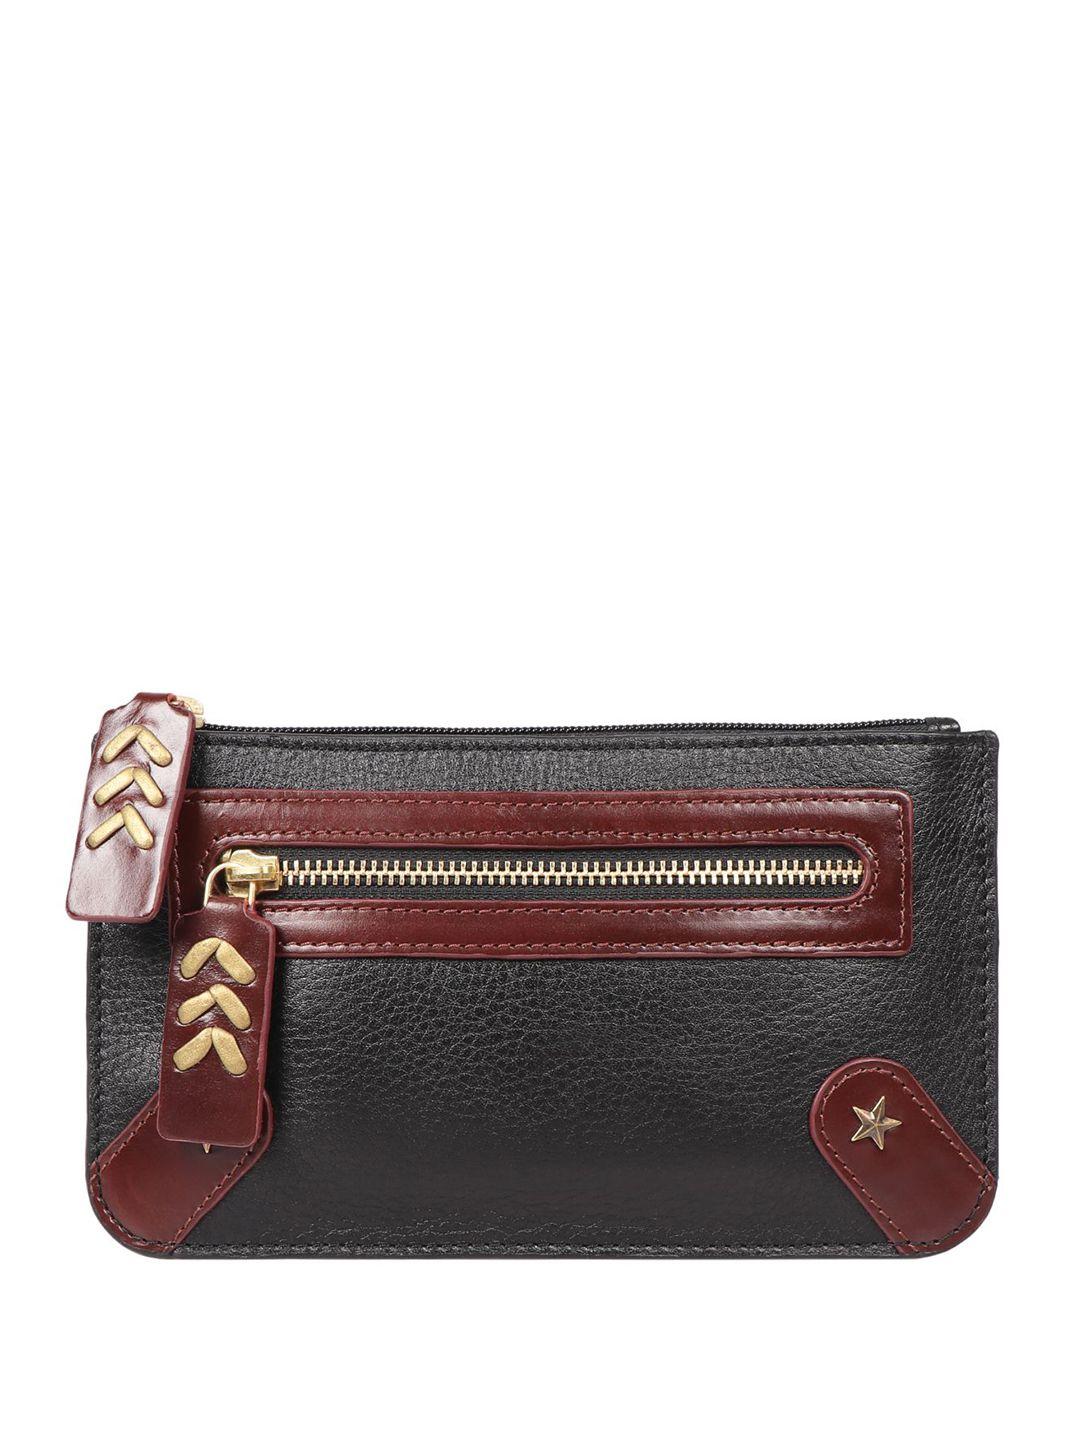 hidesign women textured envelope purse